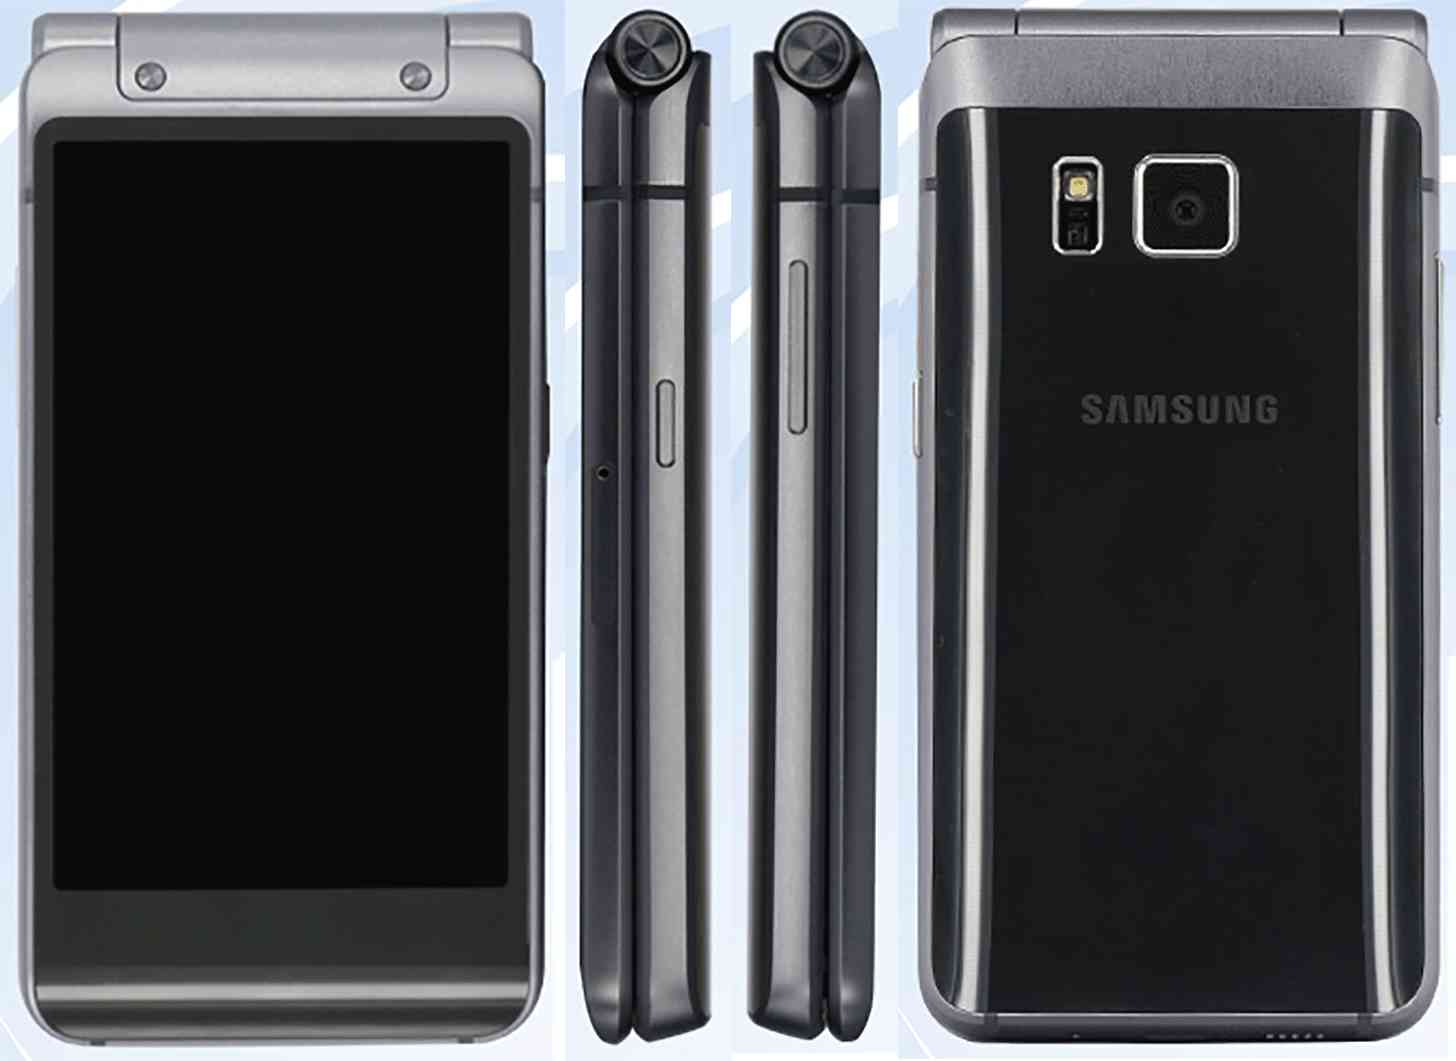 Samsung SM-W2016 Android flip phone leak